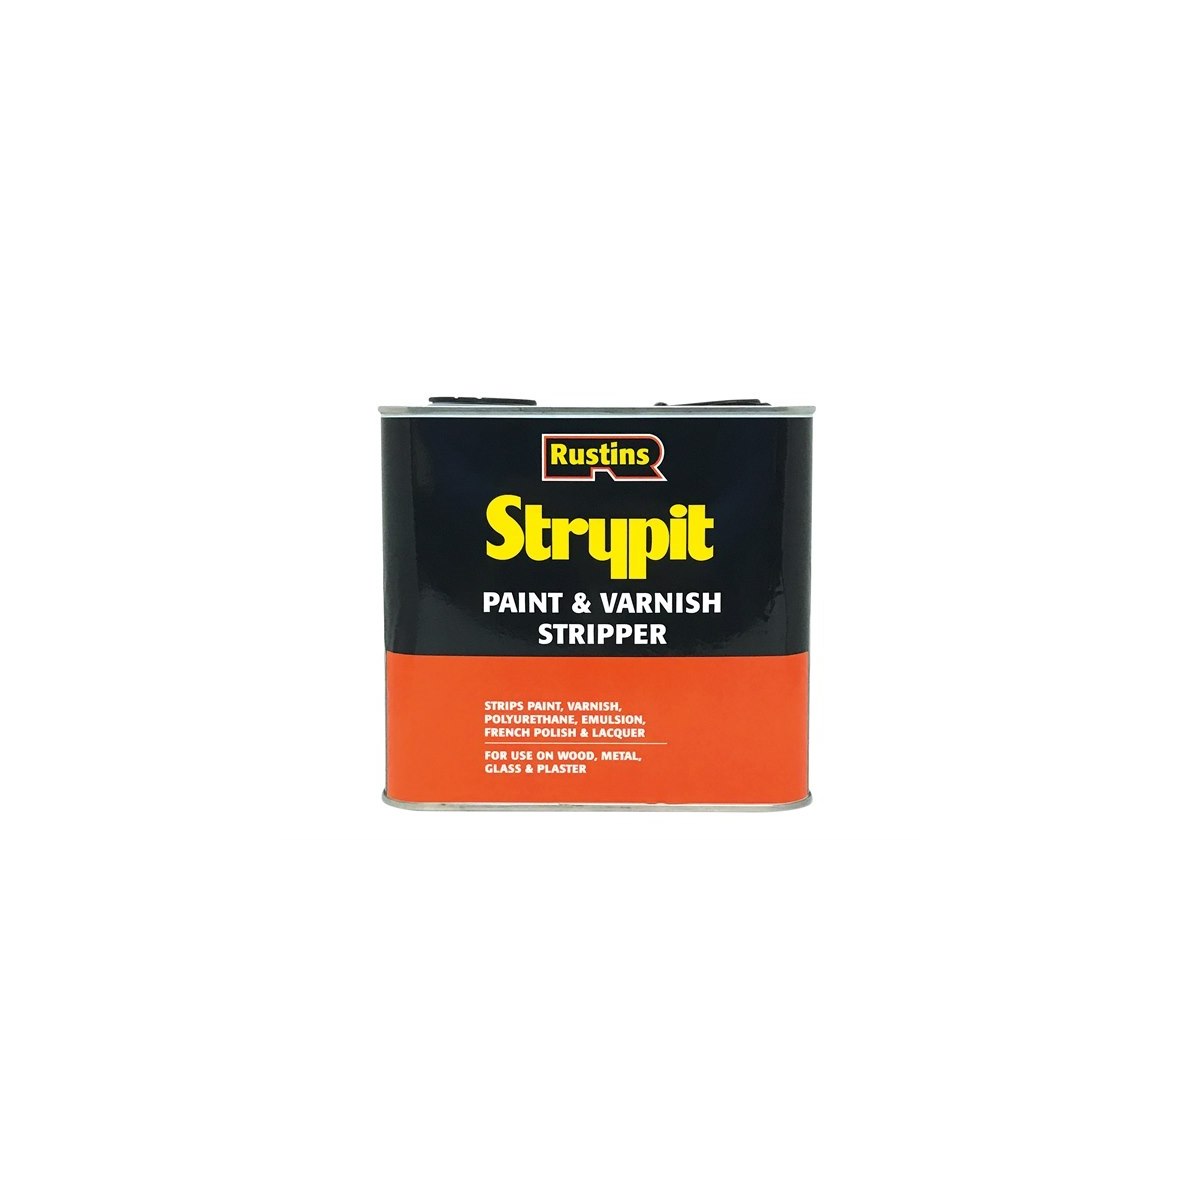 Rustins Strypit Paint and Varnish Stripper 2.5 Litre